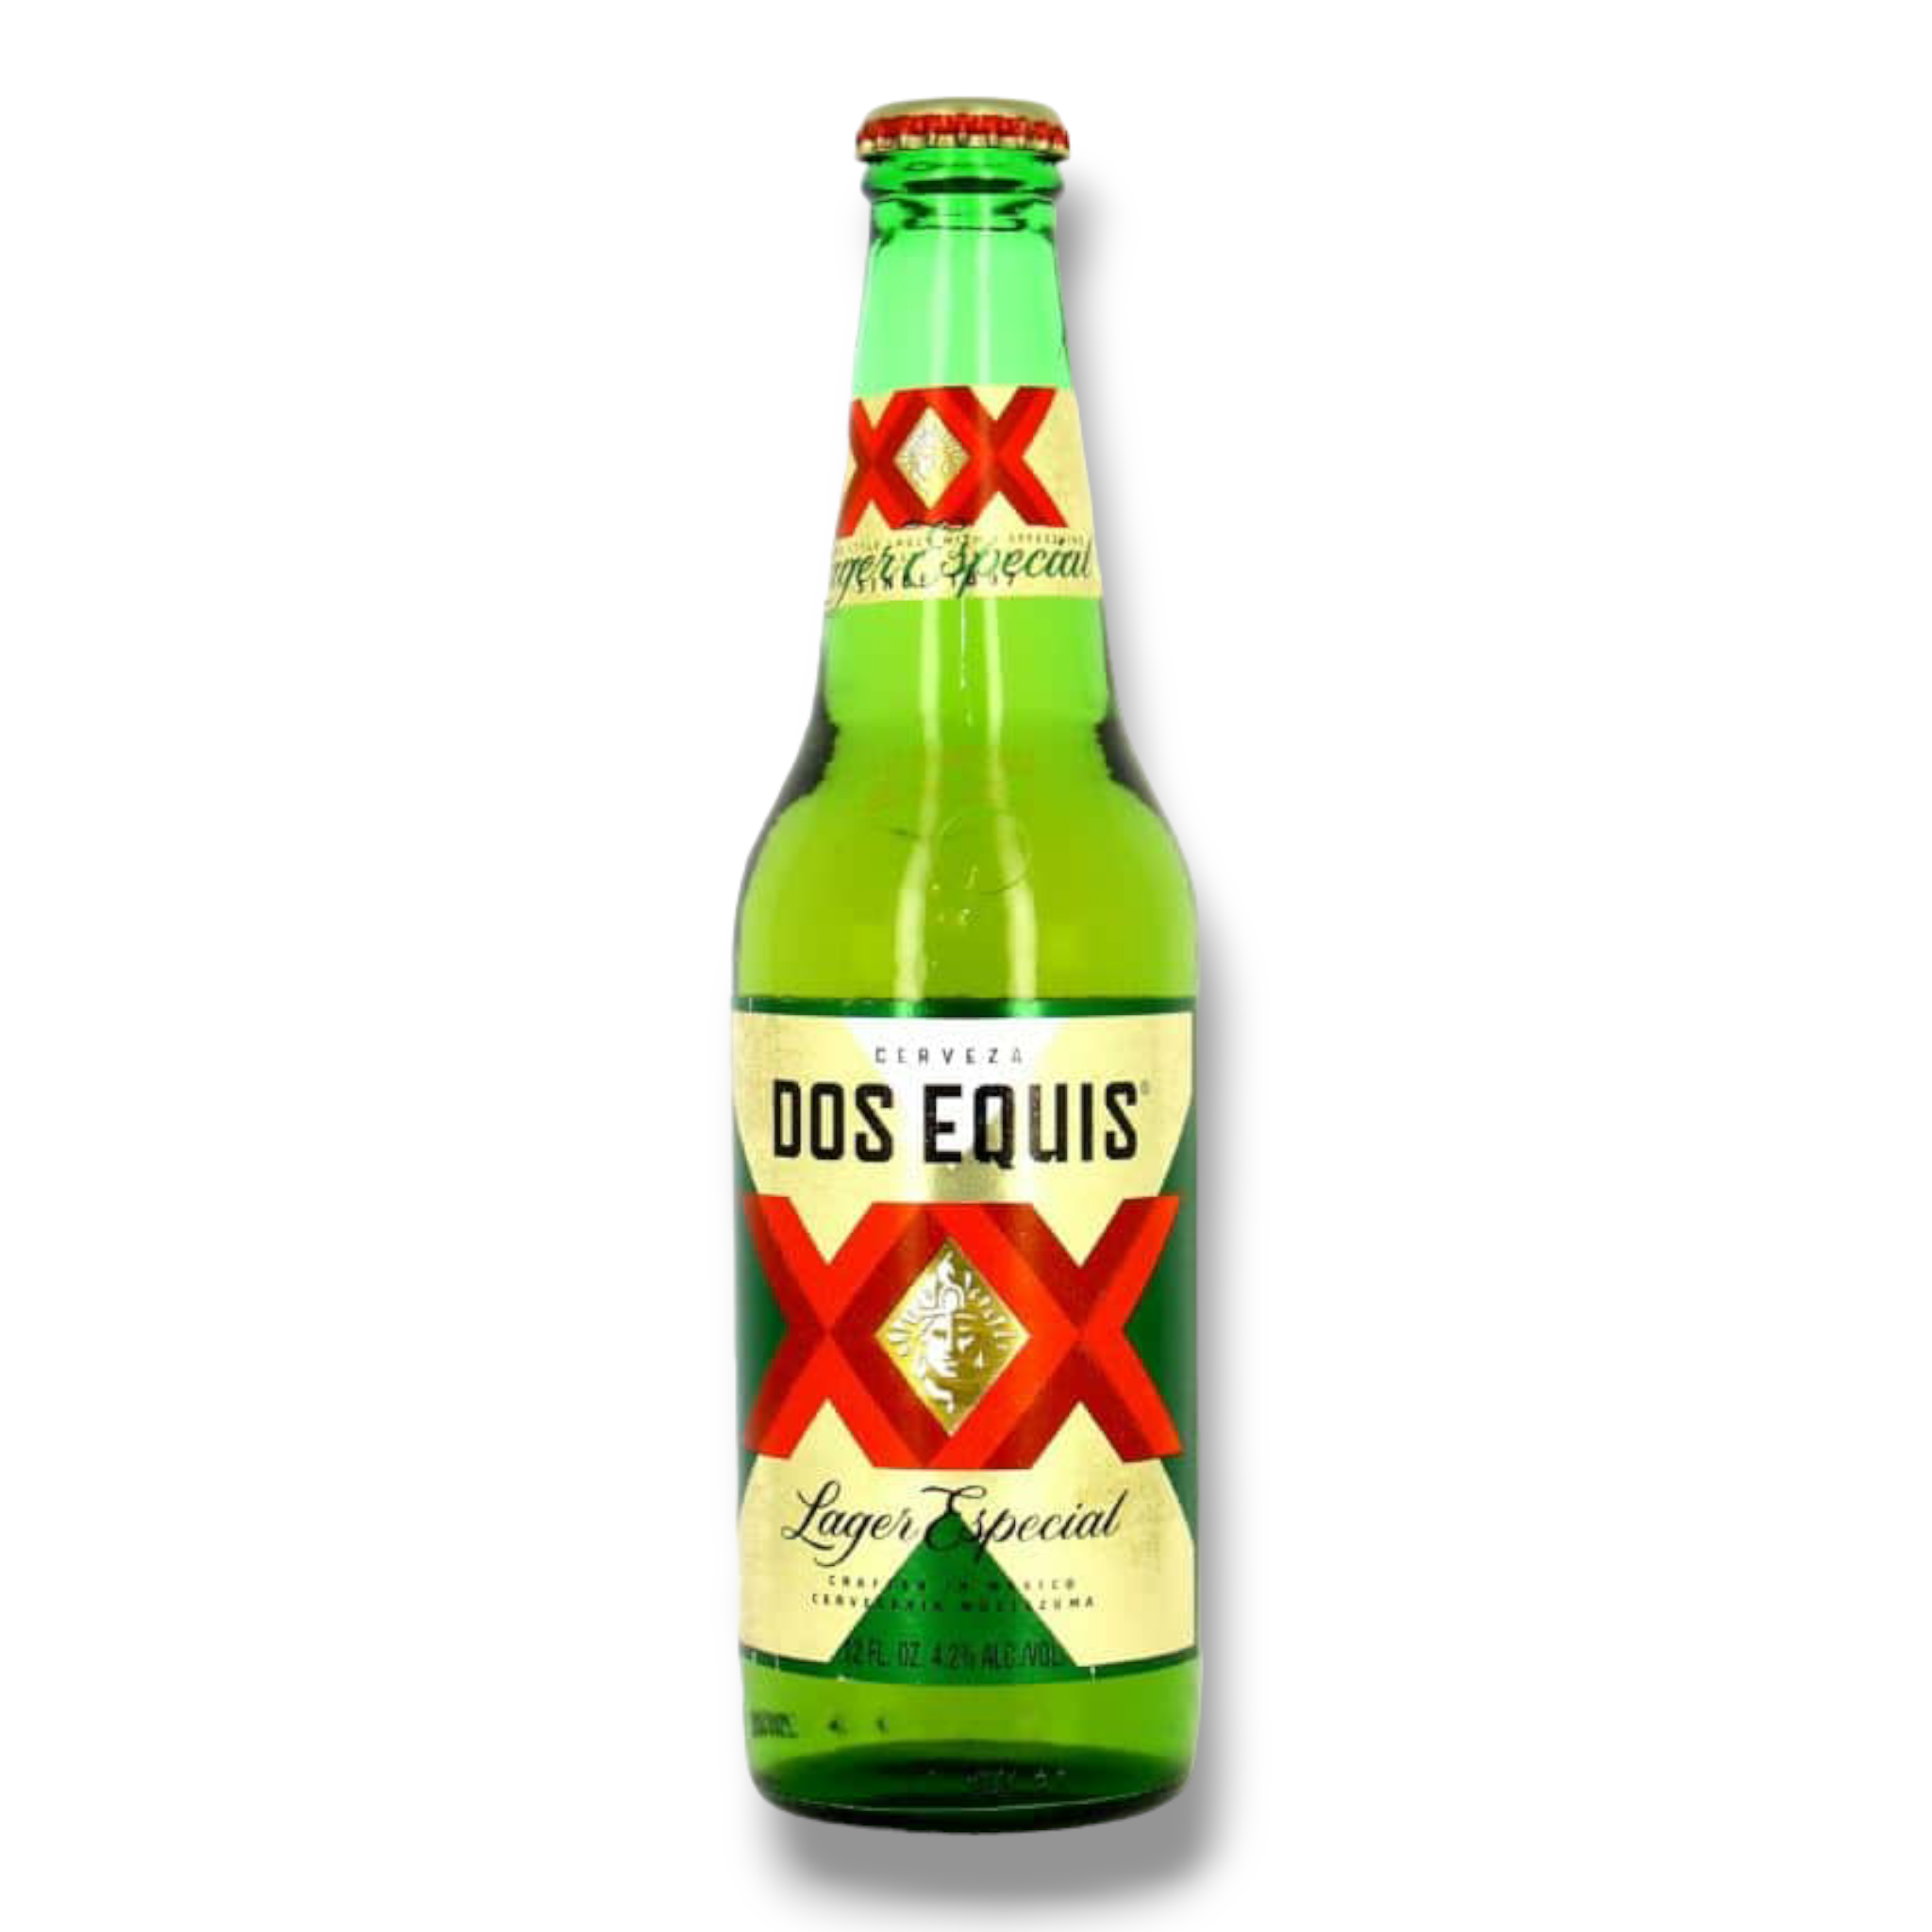 XX Dos Equis Lager Especial 0,35l mit 4,5% Vol.